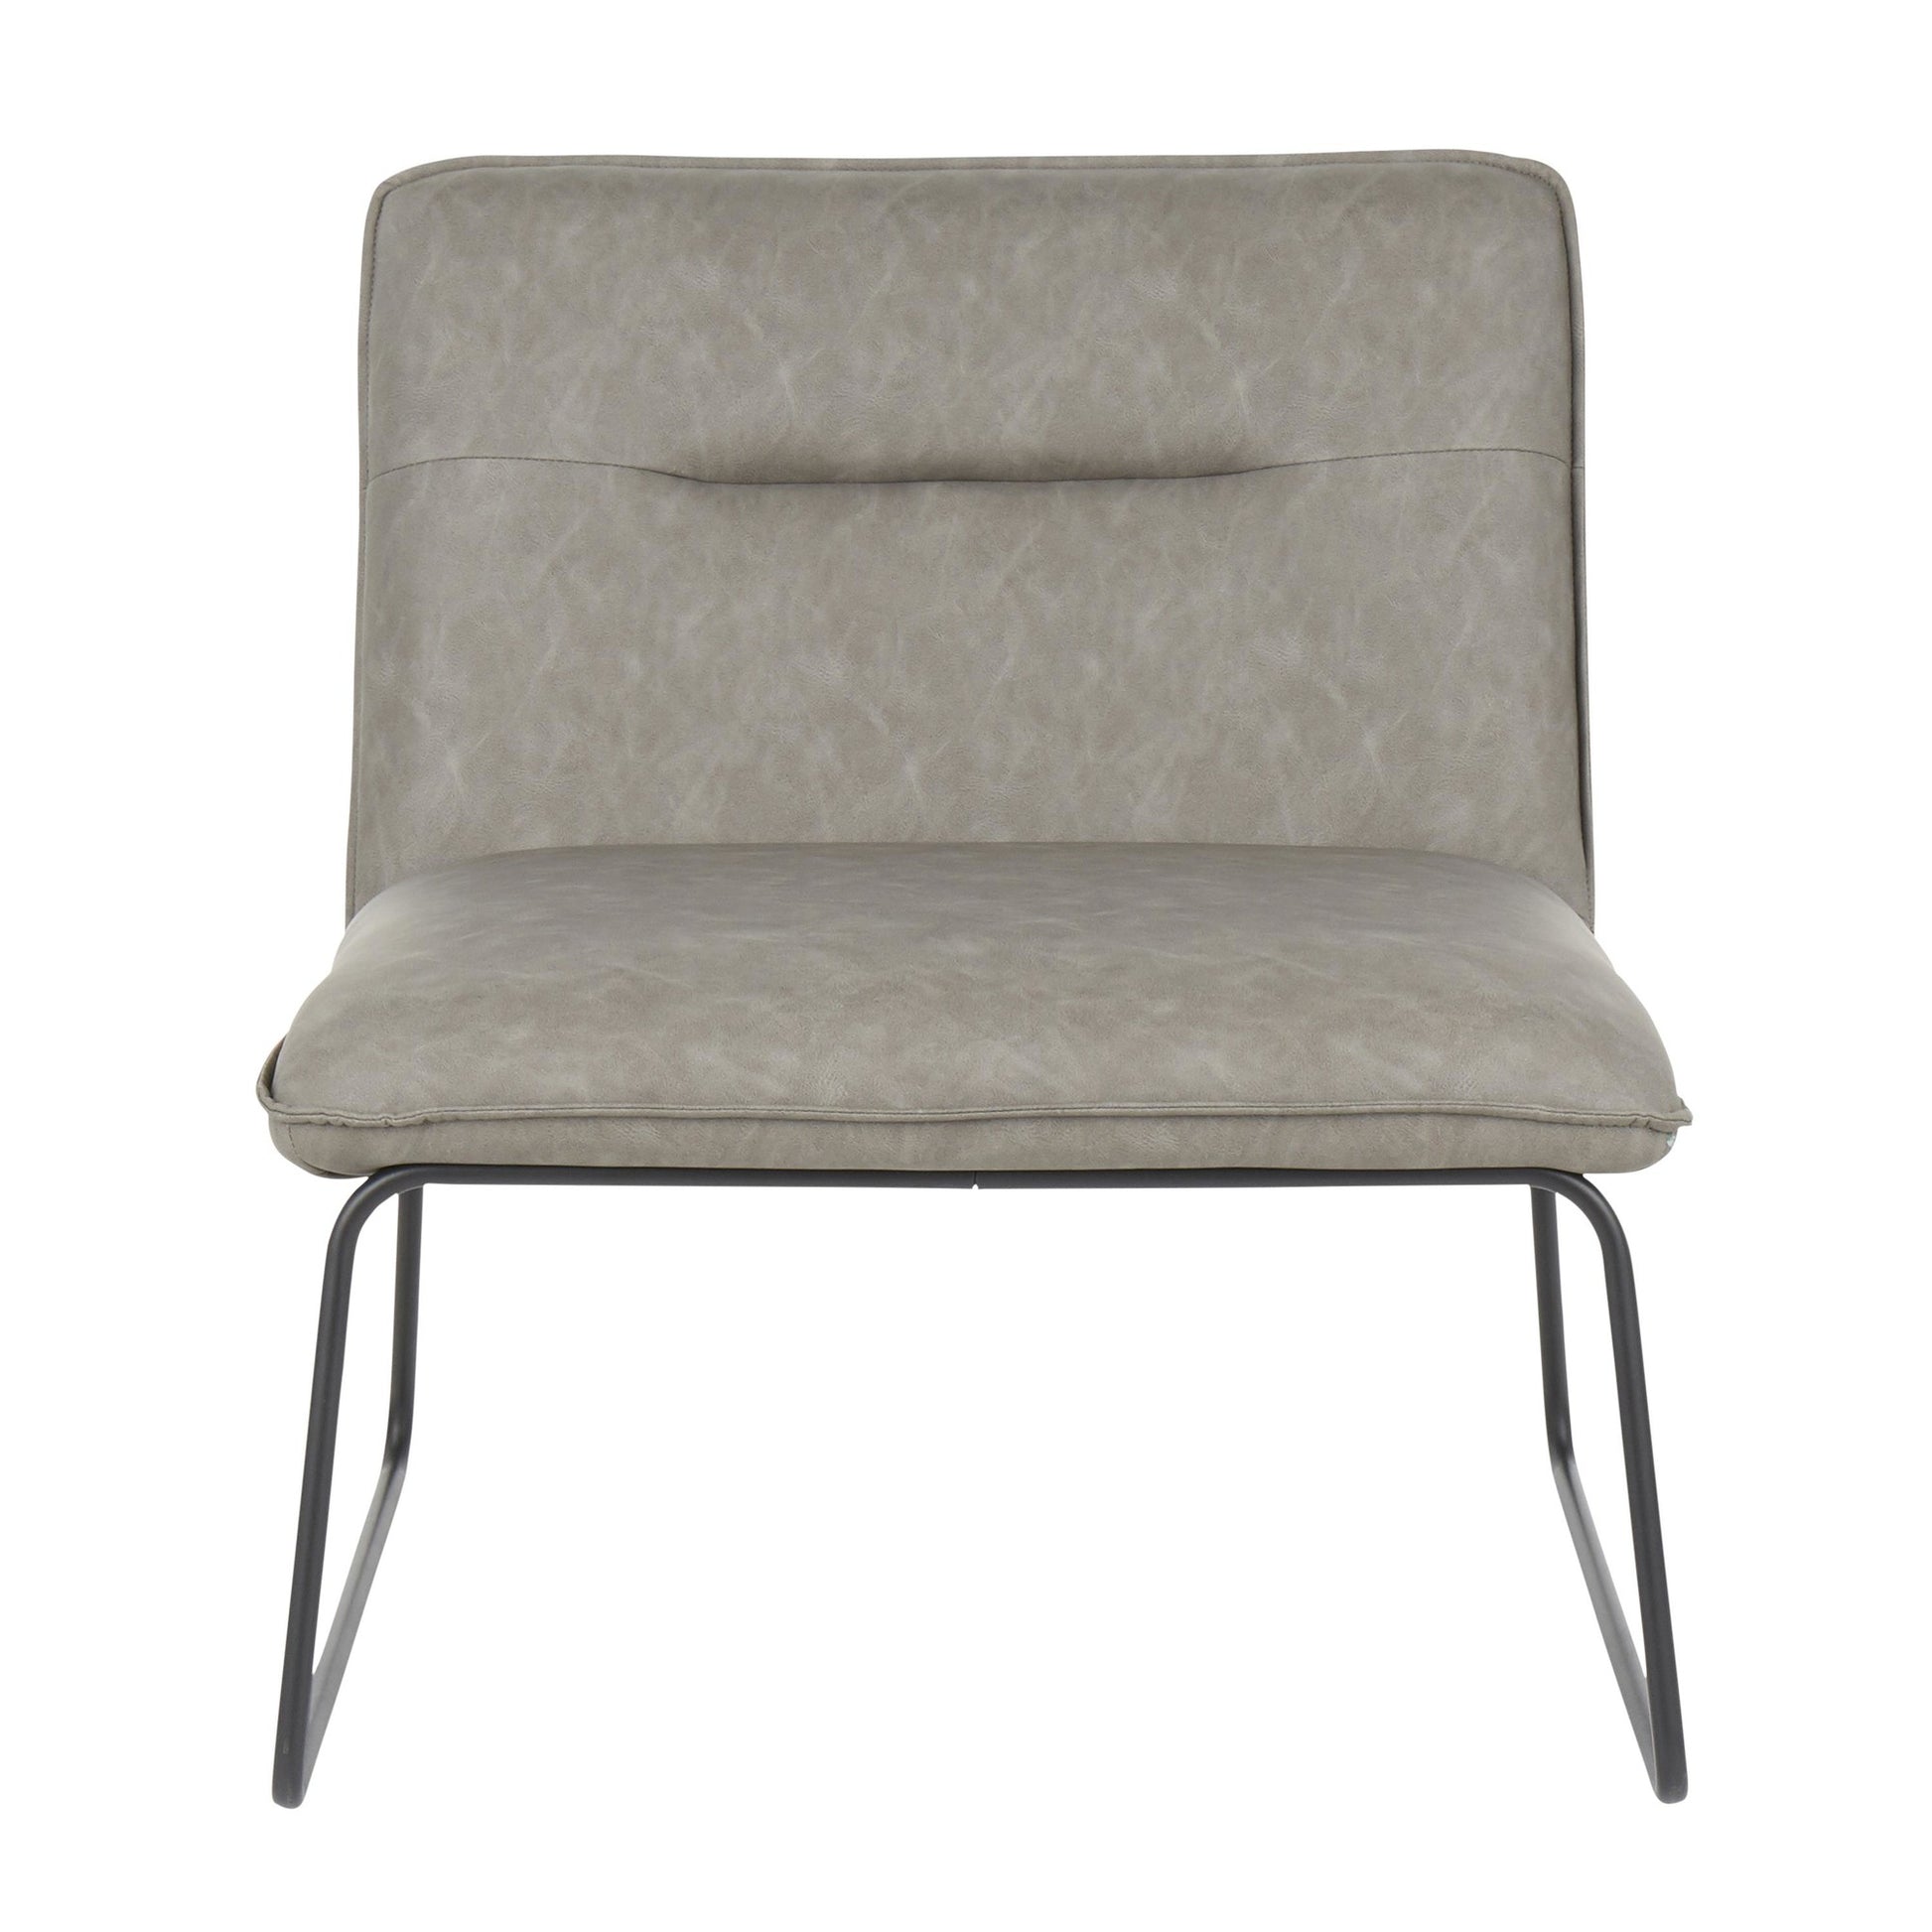 LumiSource Casper Accent Chair-8